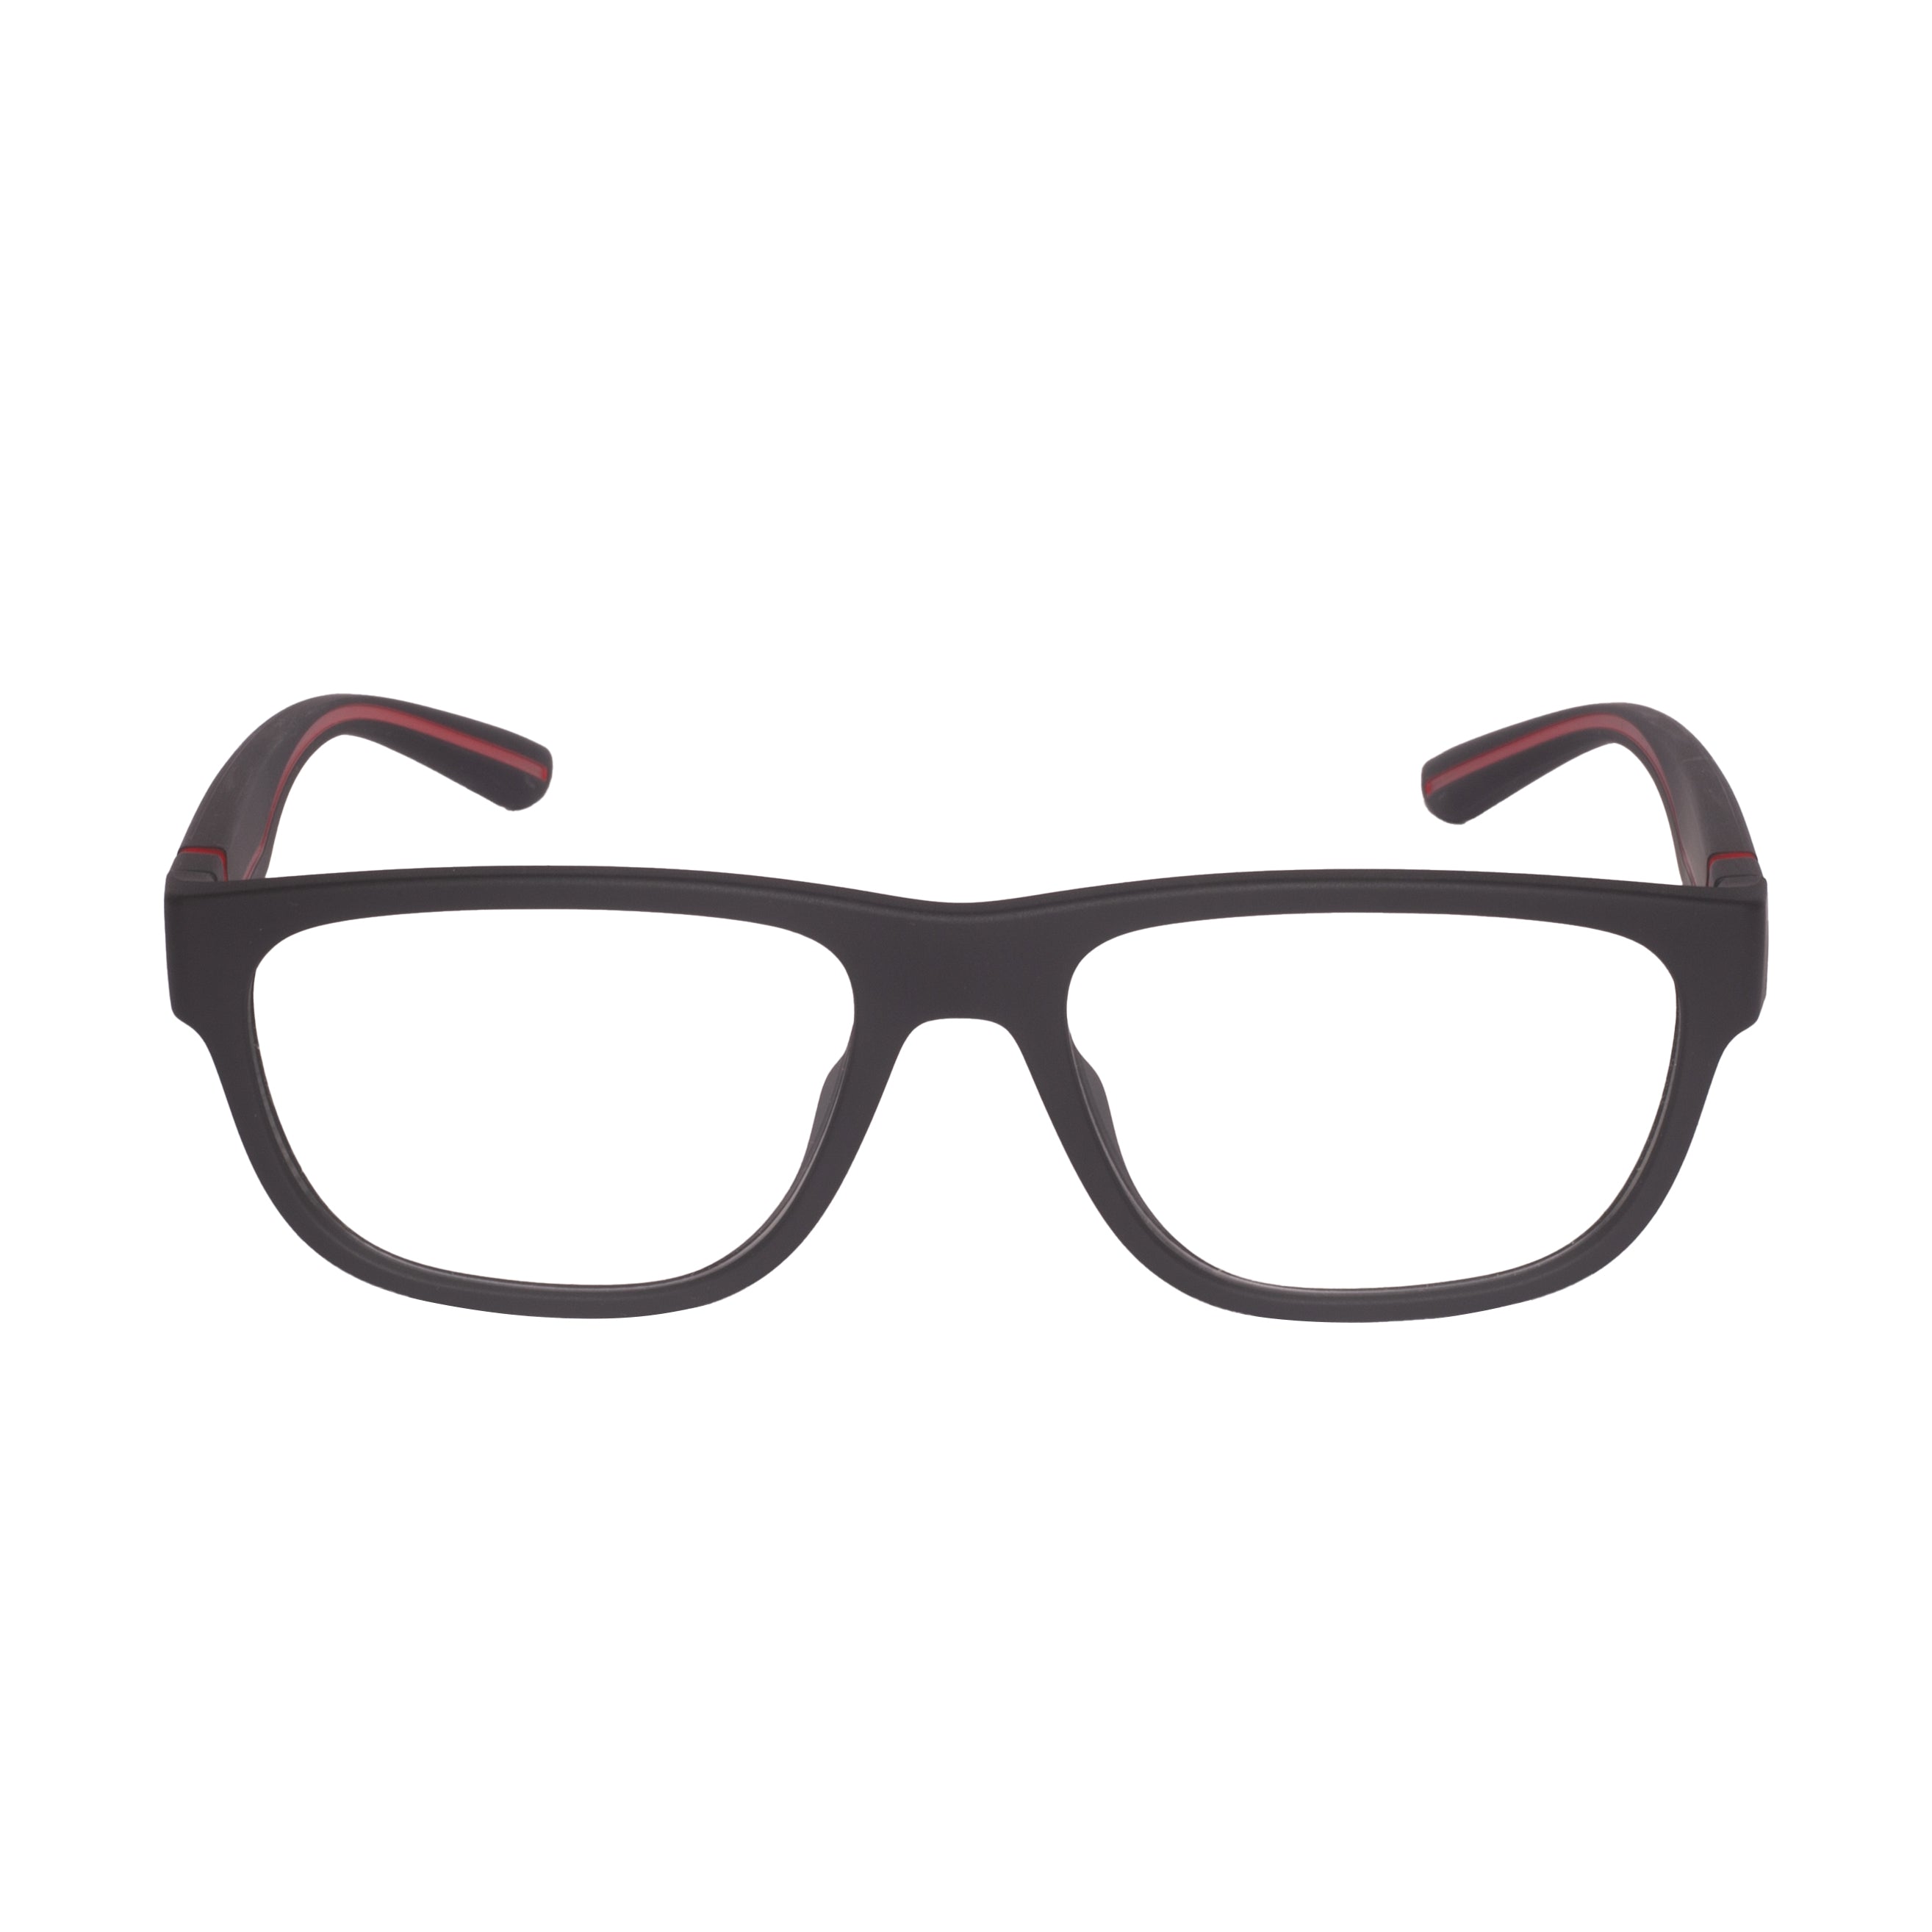 Armani Exchange-AX 3102--8078 Eyeglasses - Premium Eyeglasses from Armani Exchange - Just Rs. 8290! Shop now at Laxmi Opticians